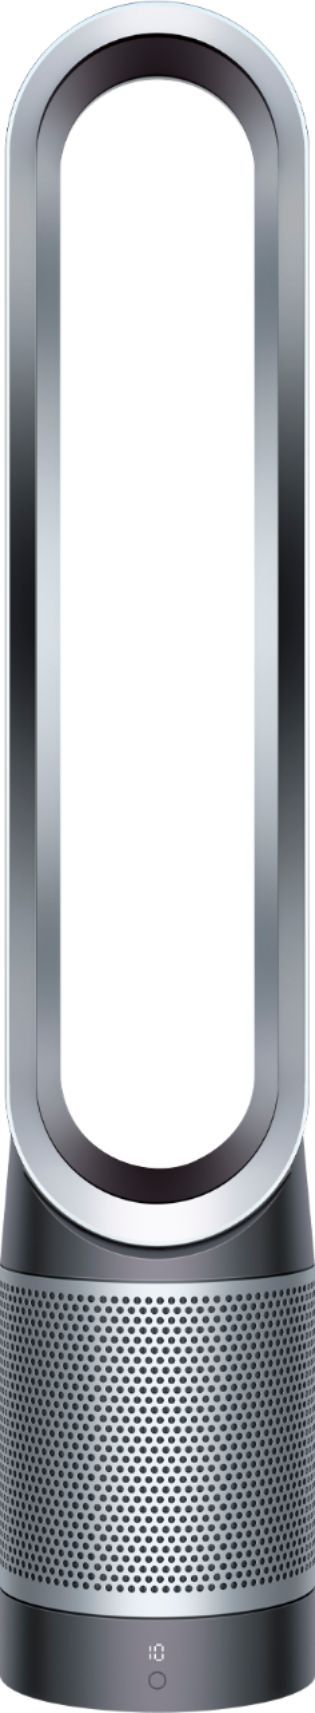 Dyson Pure Cool Purifying Fan TP01, Tower Iron / Silver 286822-01 - Best Buy | Best Buy U.S.